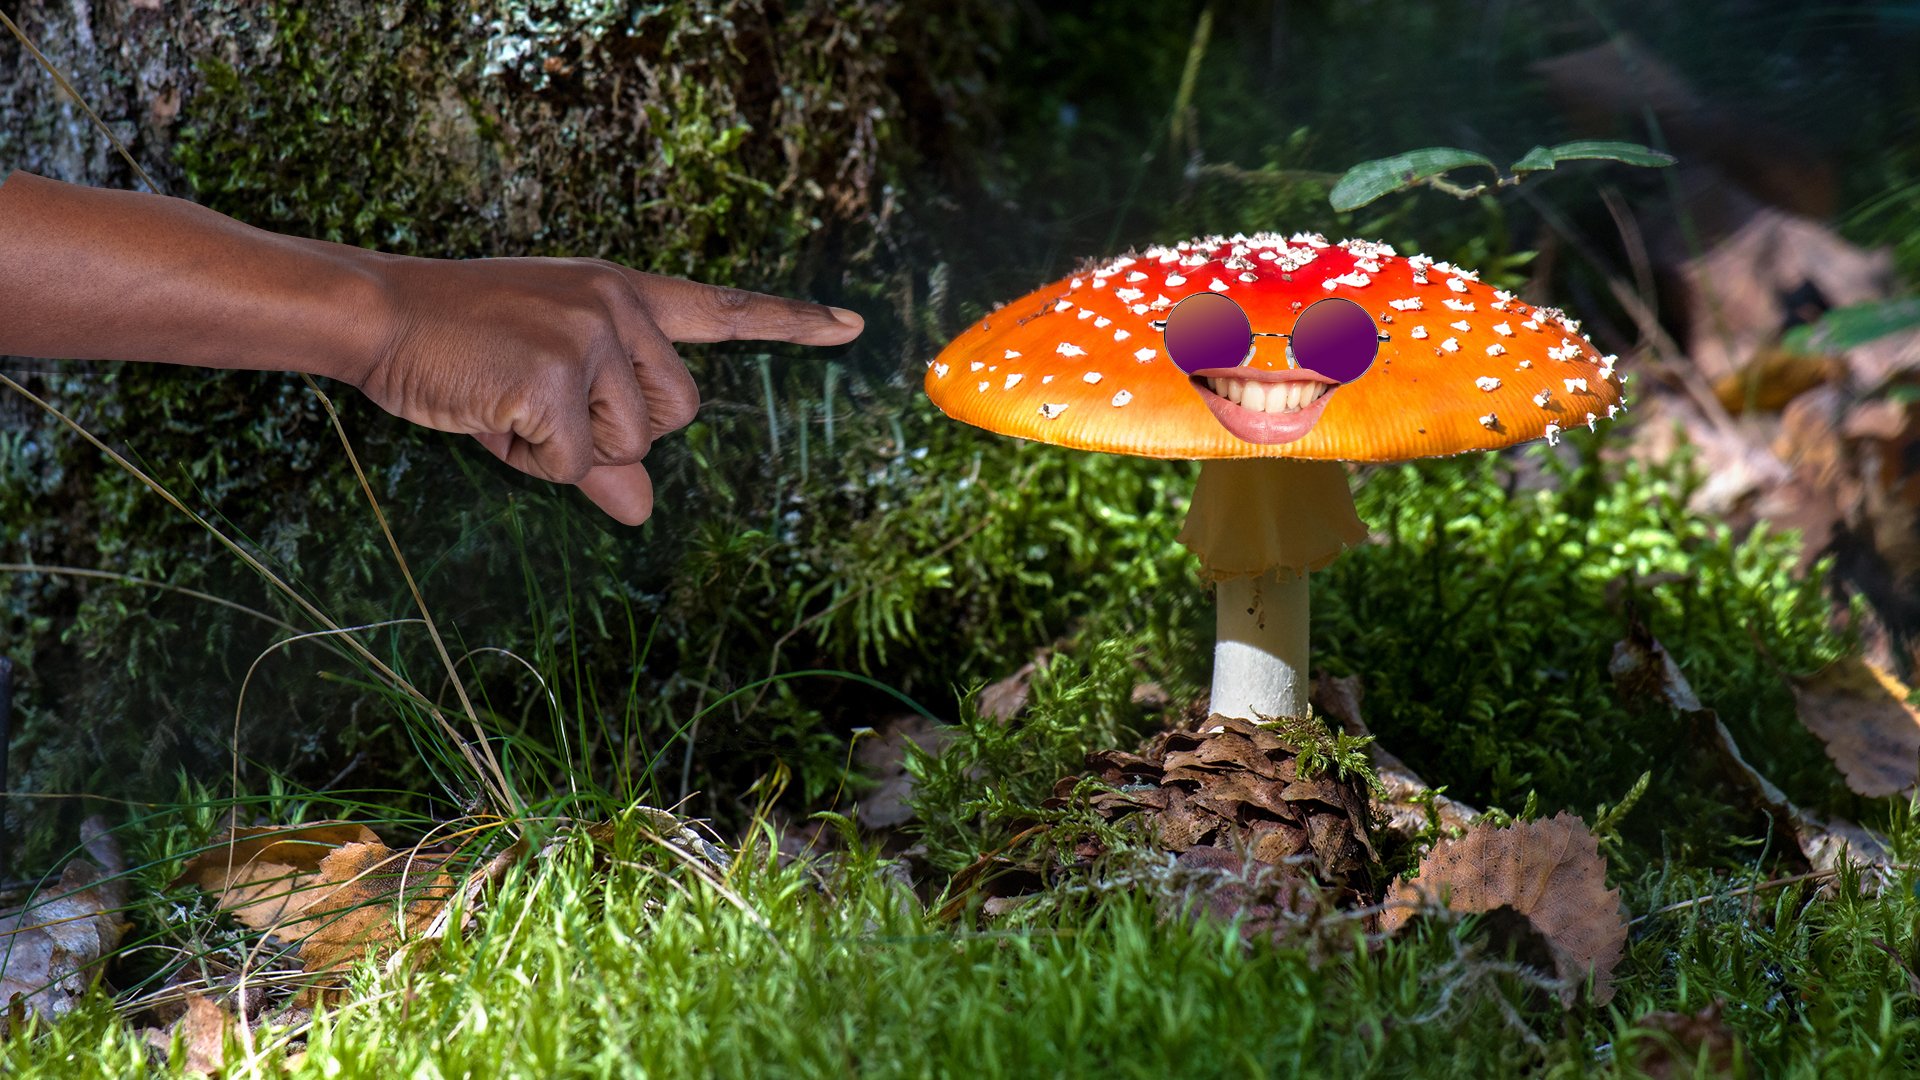 A smiling mushroom